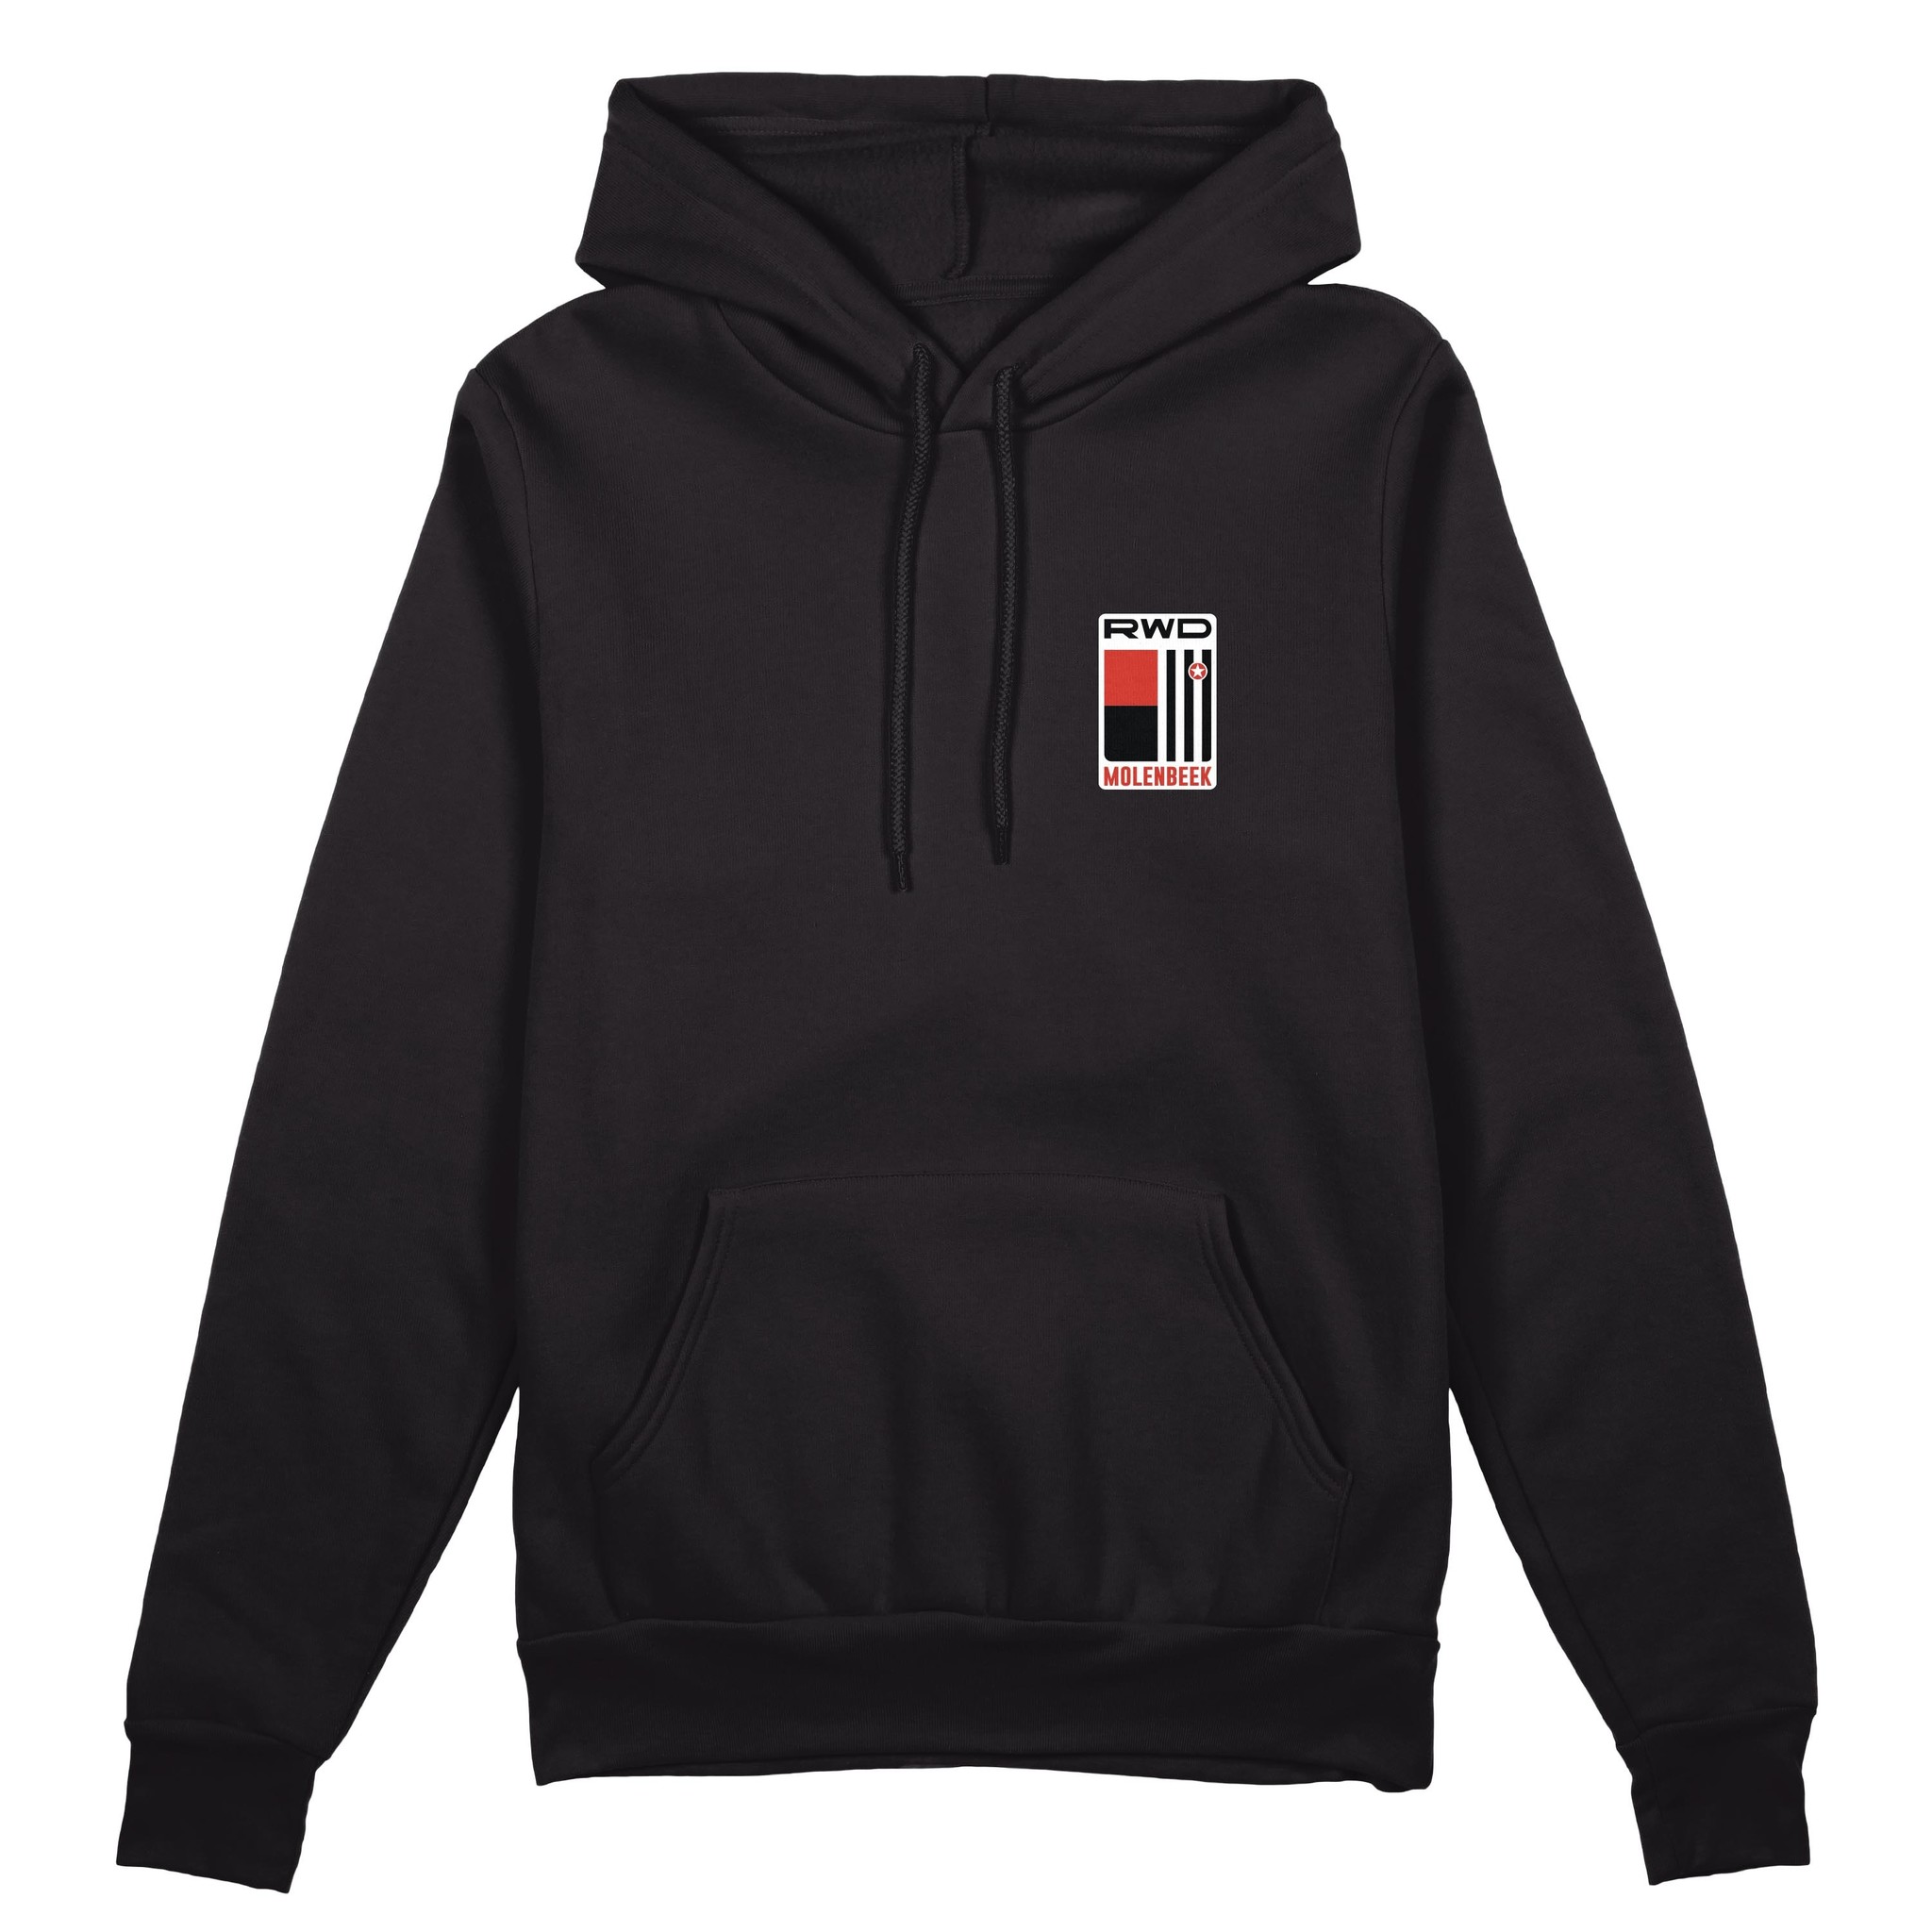 Topfanz BASIC hoodie noir avec logo - RWDM